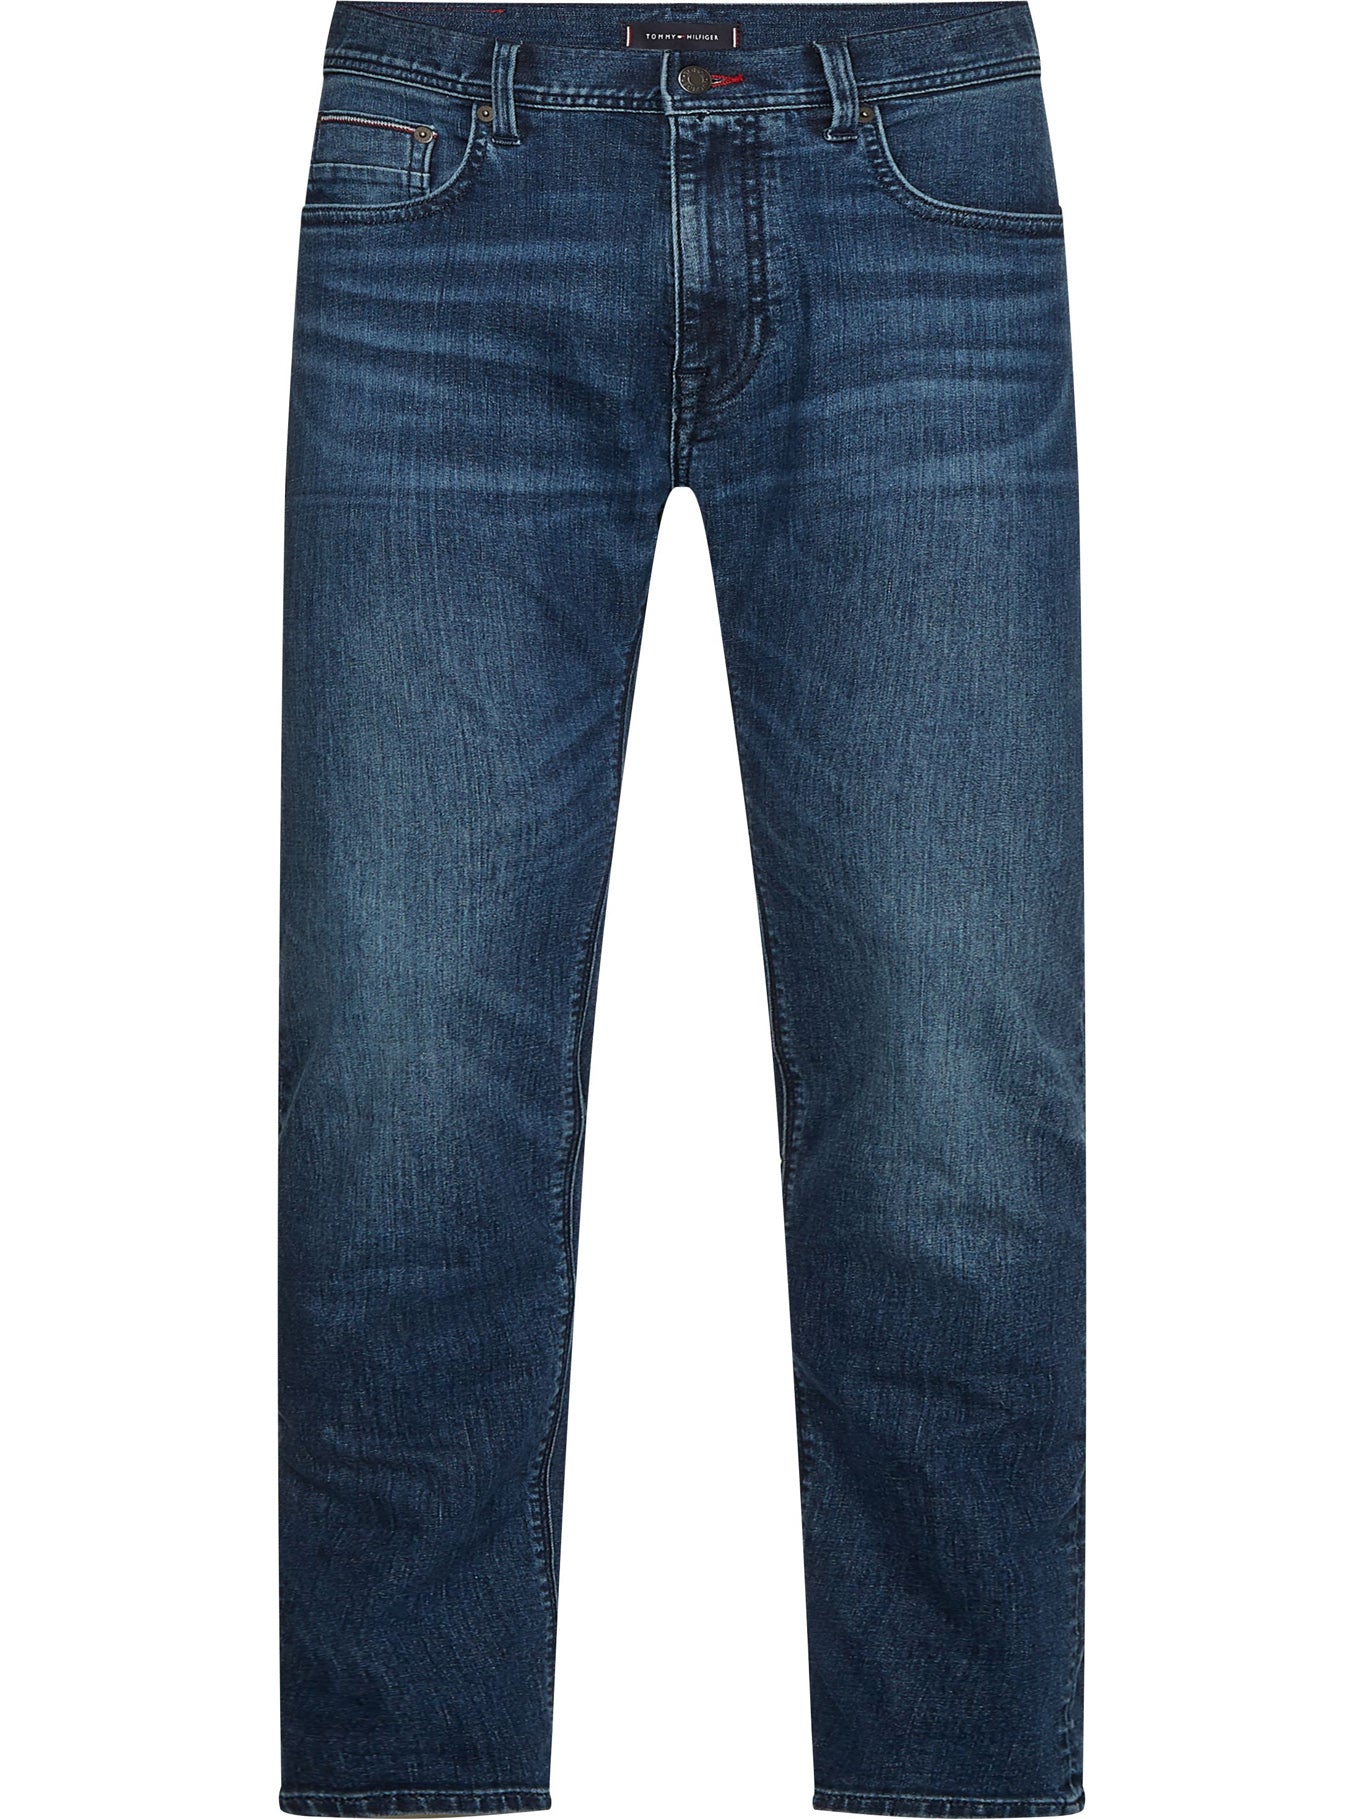 pantalon-jeans-tommy-hilfiger-p-caballeros-3